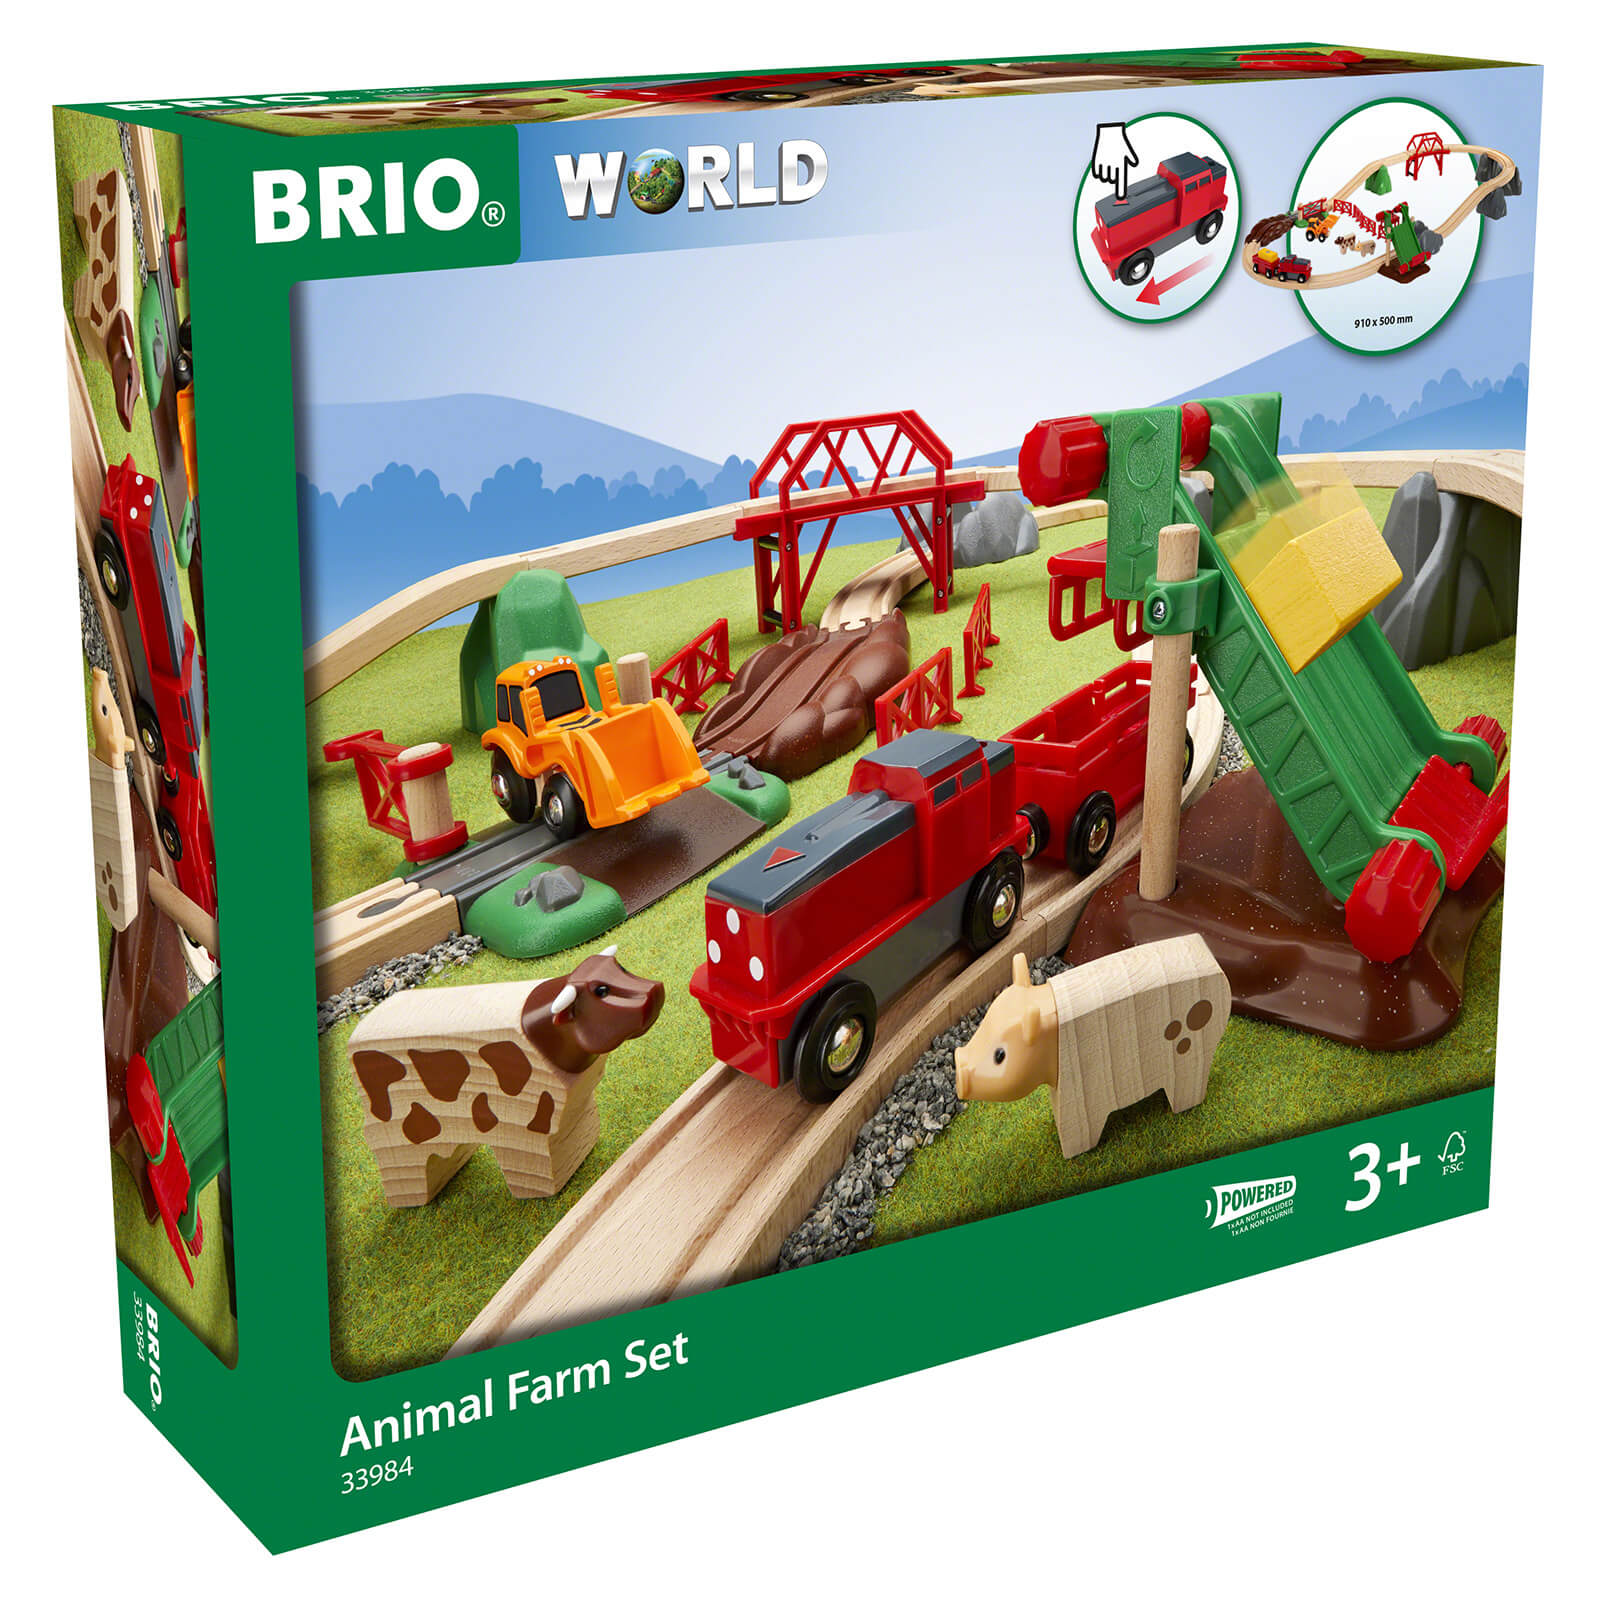 Brio World - Animal Farm Set